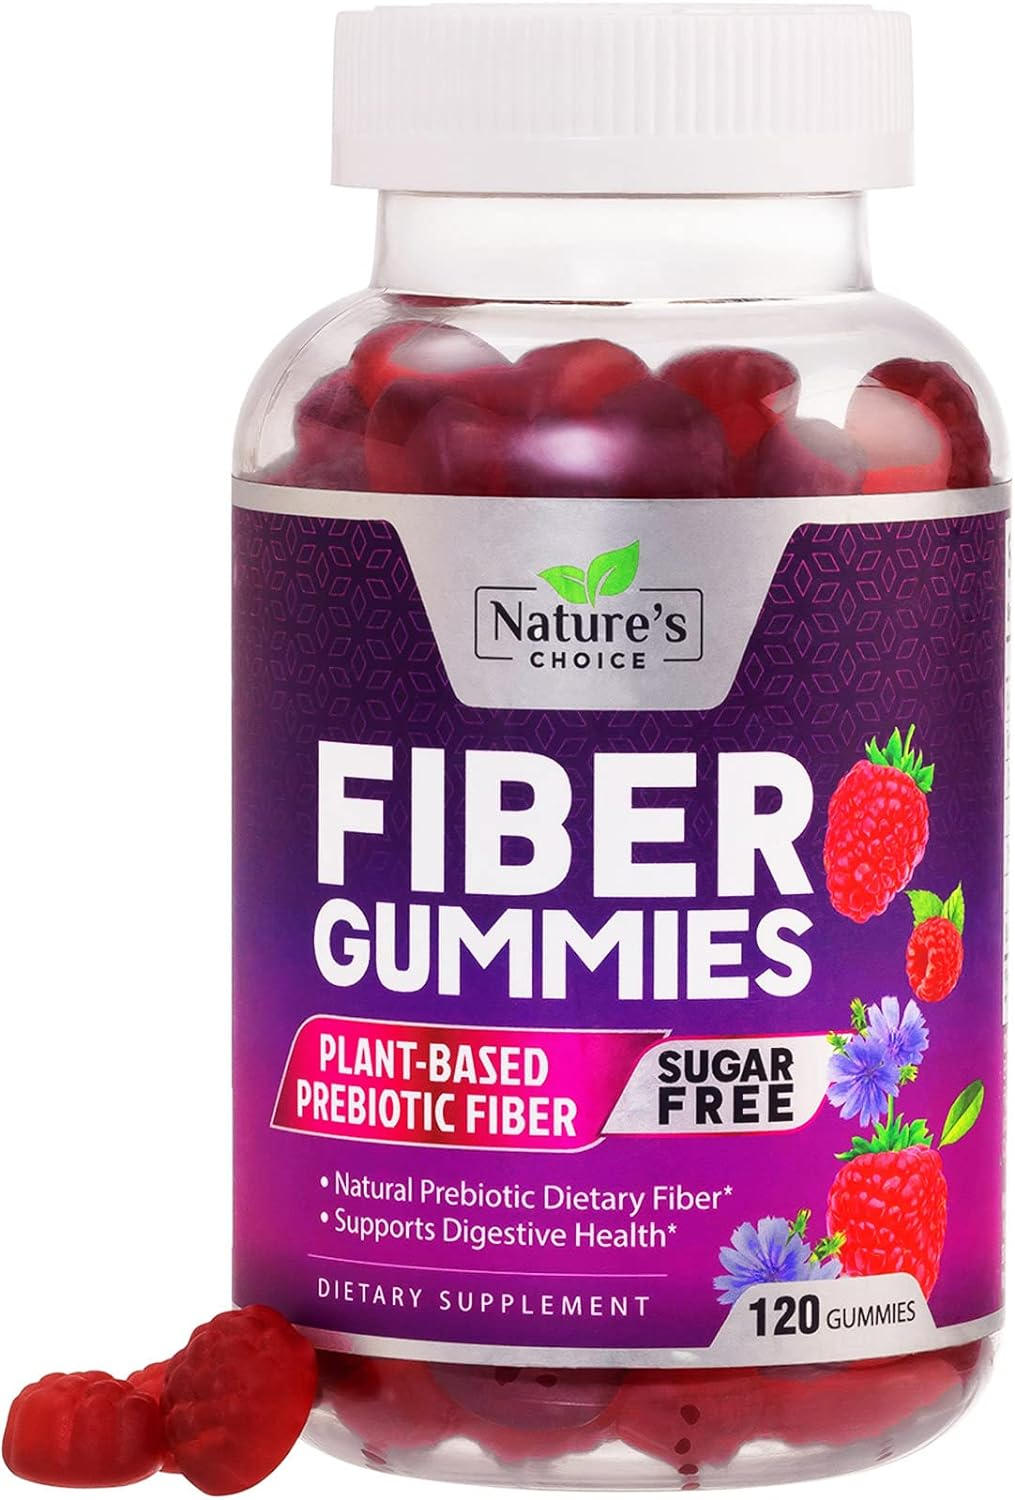 Sugar Free Fiber Gummies for Adults, Daily Prebiotic Fiber Supplement  Digestive Health Support - Supports Regularity  Digestive Health, Natures Plant Based, Non-GMO, Berry Flavor - 120 Gummies